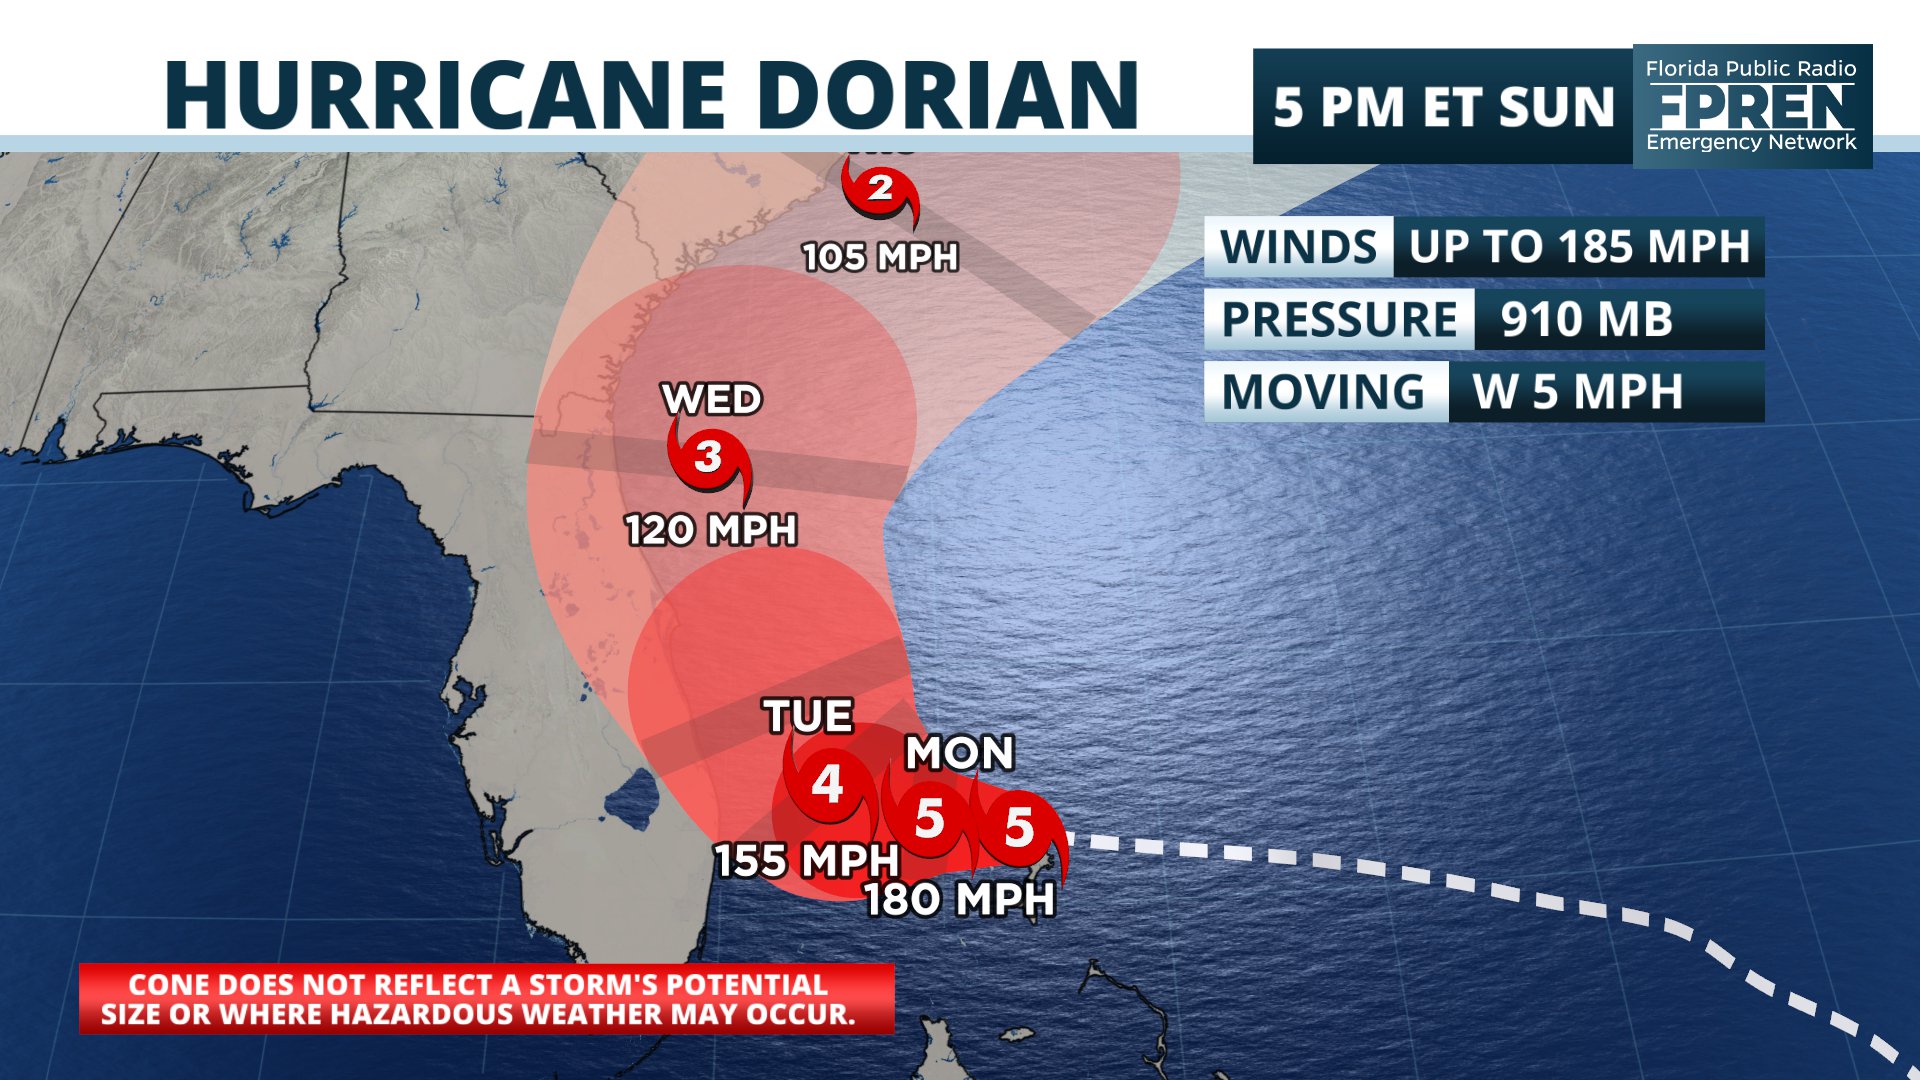 Hurricane Warnings Issued in SE Florida ahead of Hurricane Dorian